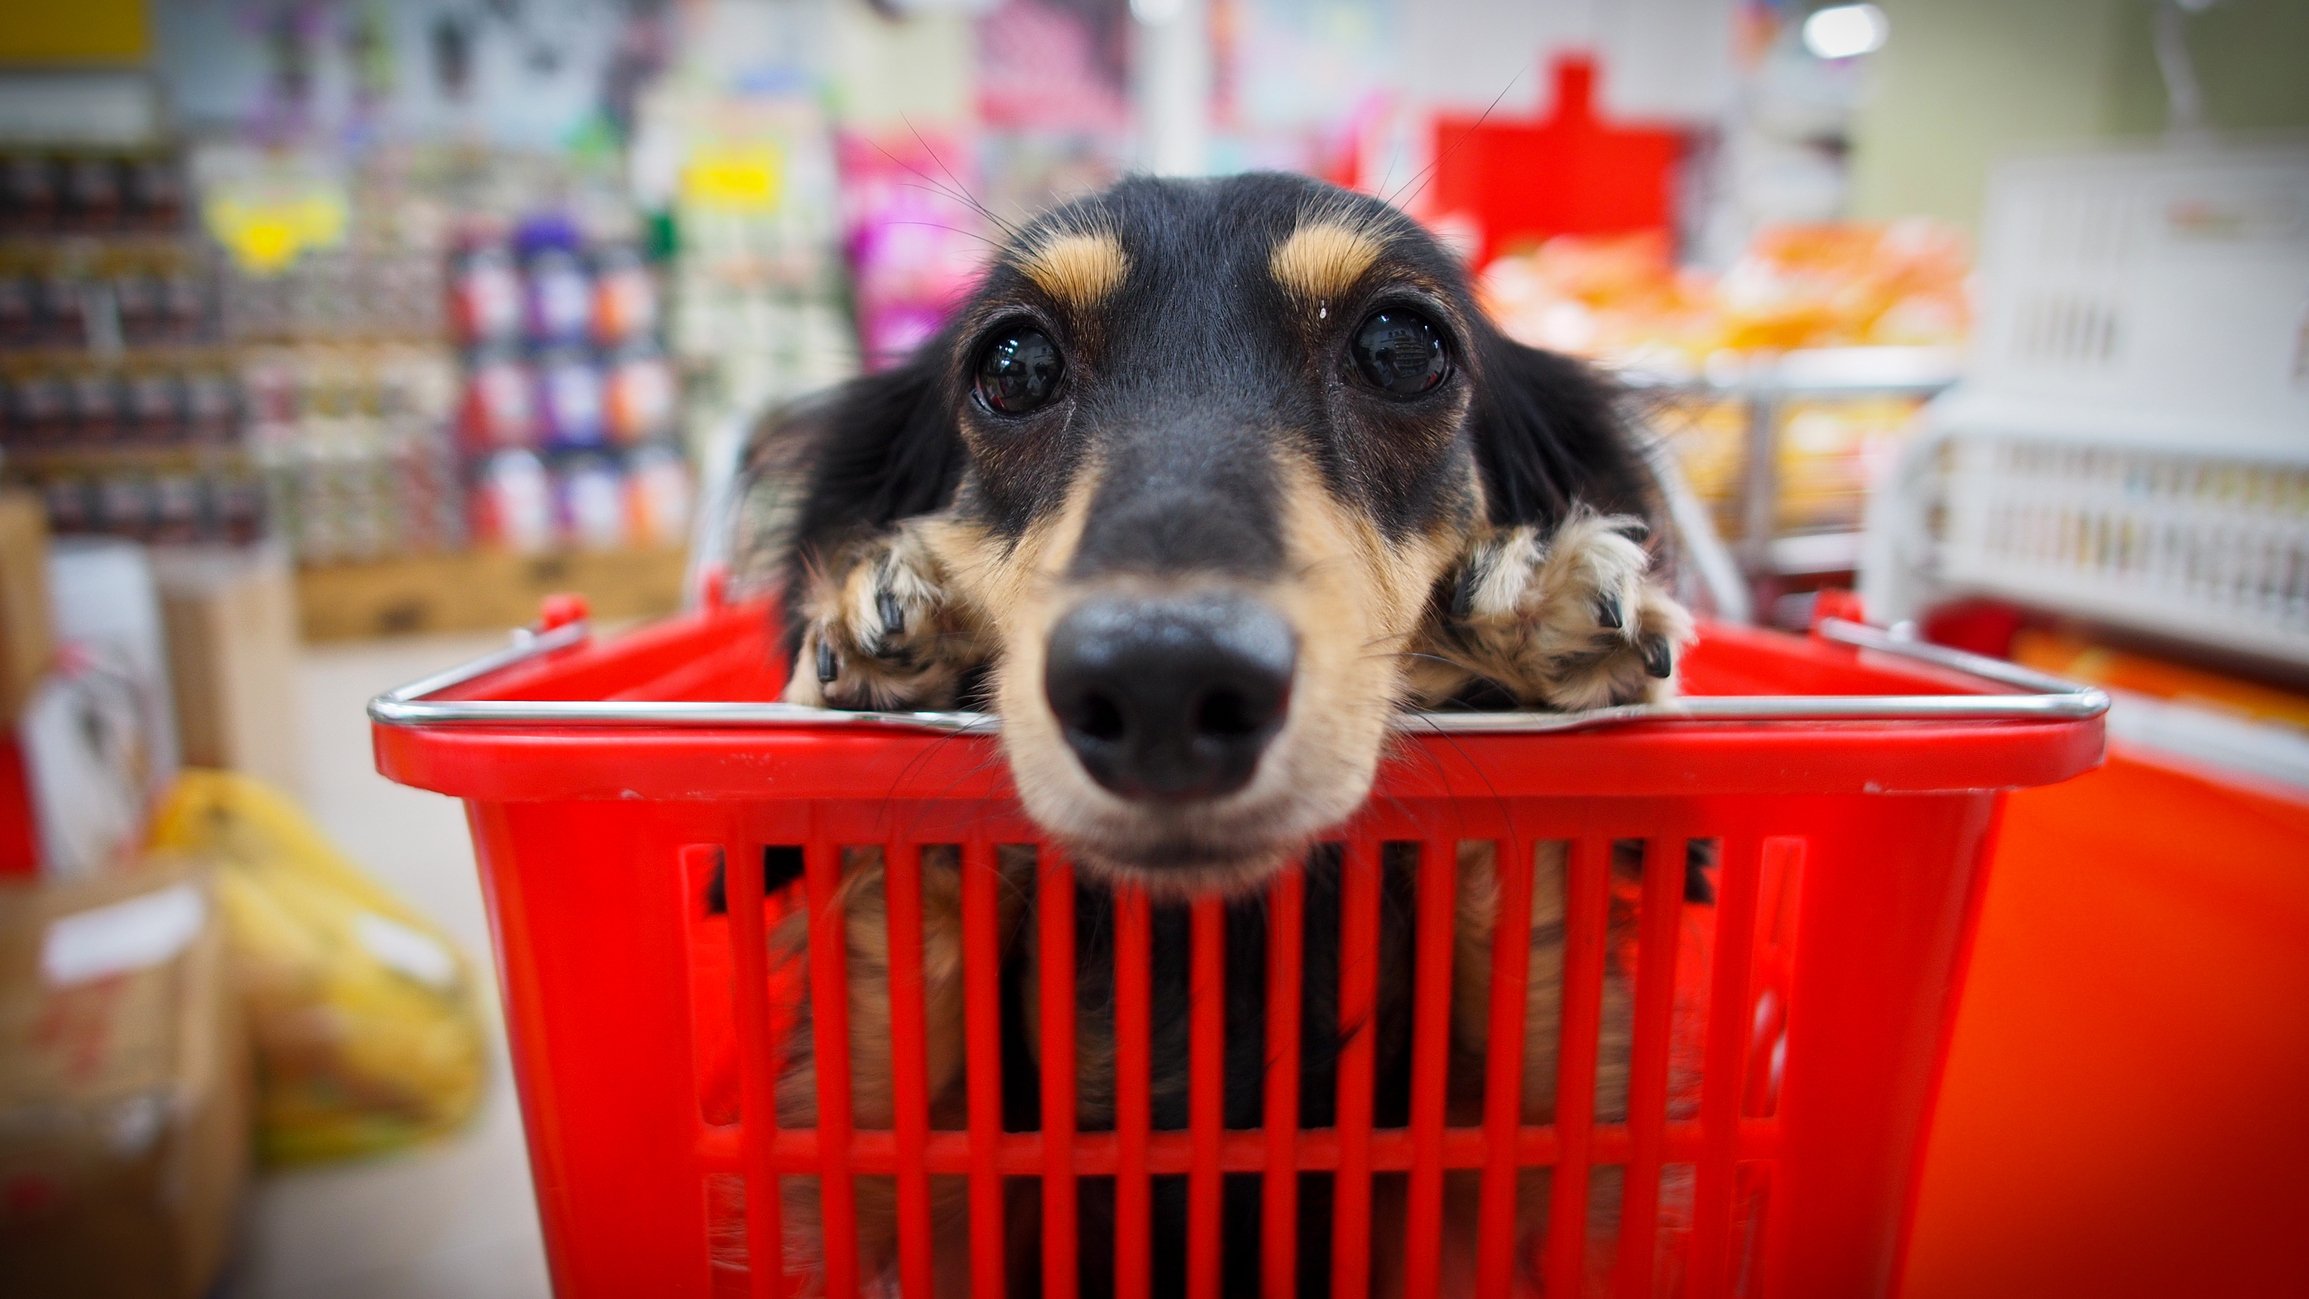 Nahaufnahme des Hundes, der im Korb sitzt. | Quelle: Getty Images